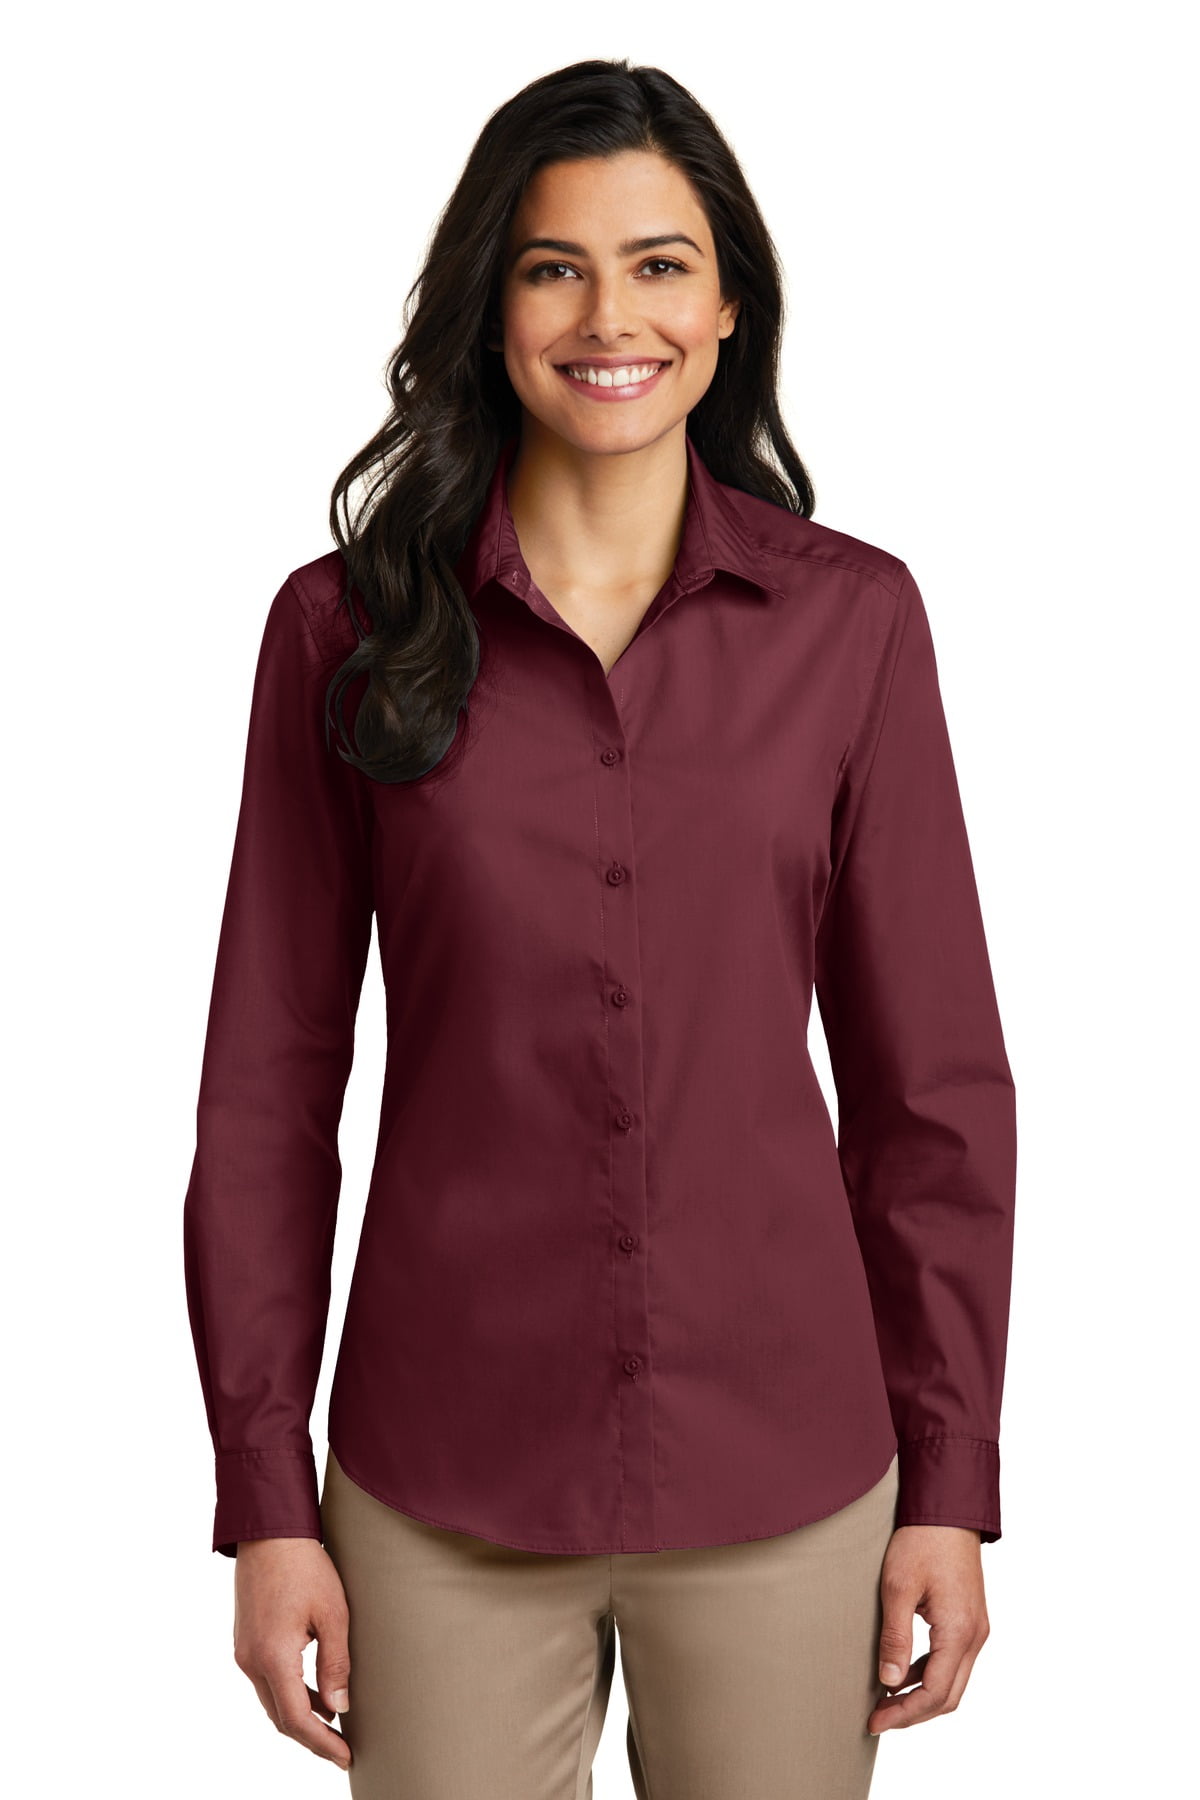 Port Authority Adult Female Women Plain Long Sleeves Shirt